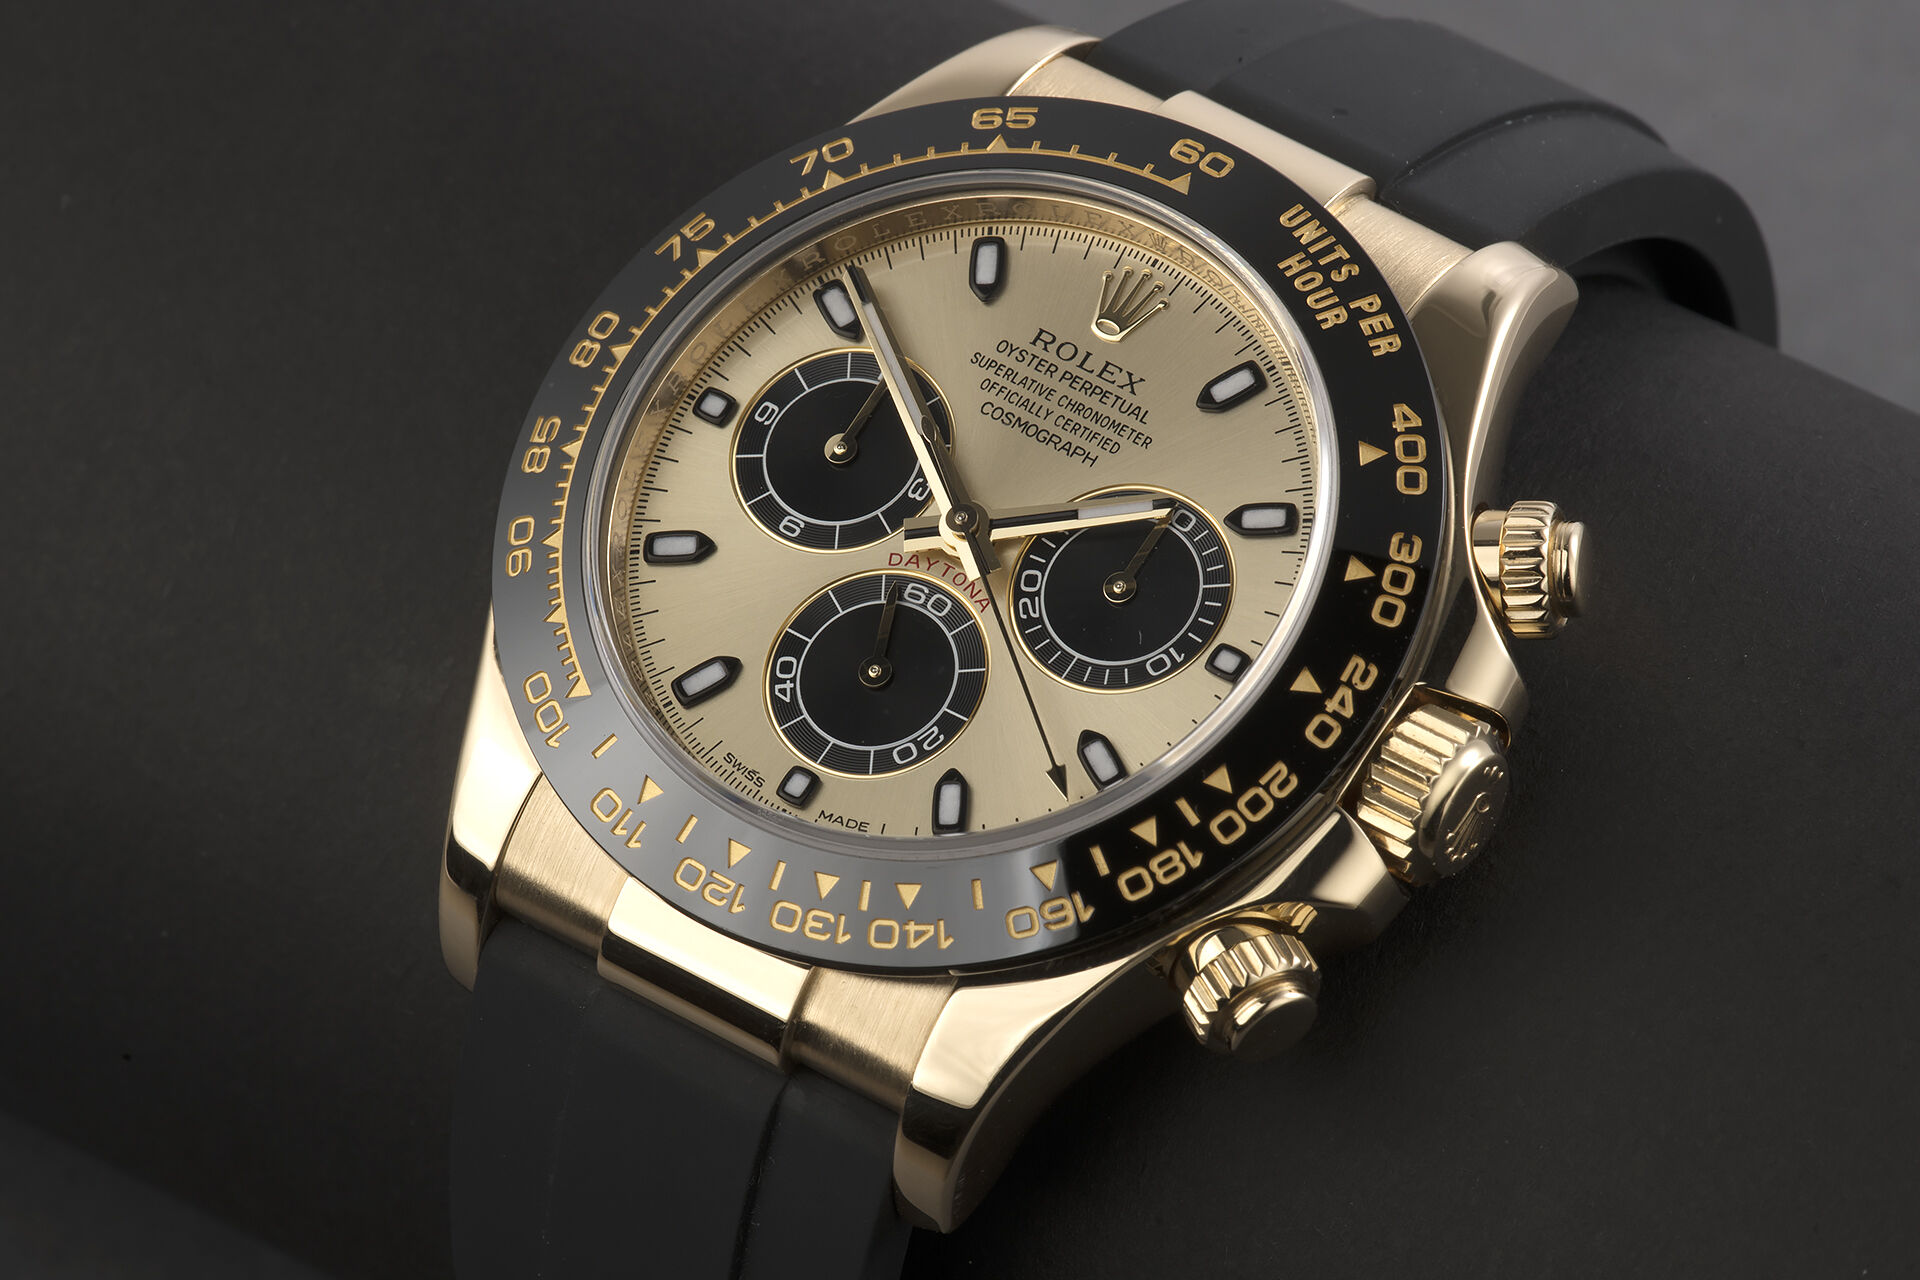 ref 116518LN | 'Yellow Gold' Cerachrom Bezel | Rolex Cosmograph Daytona